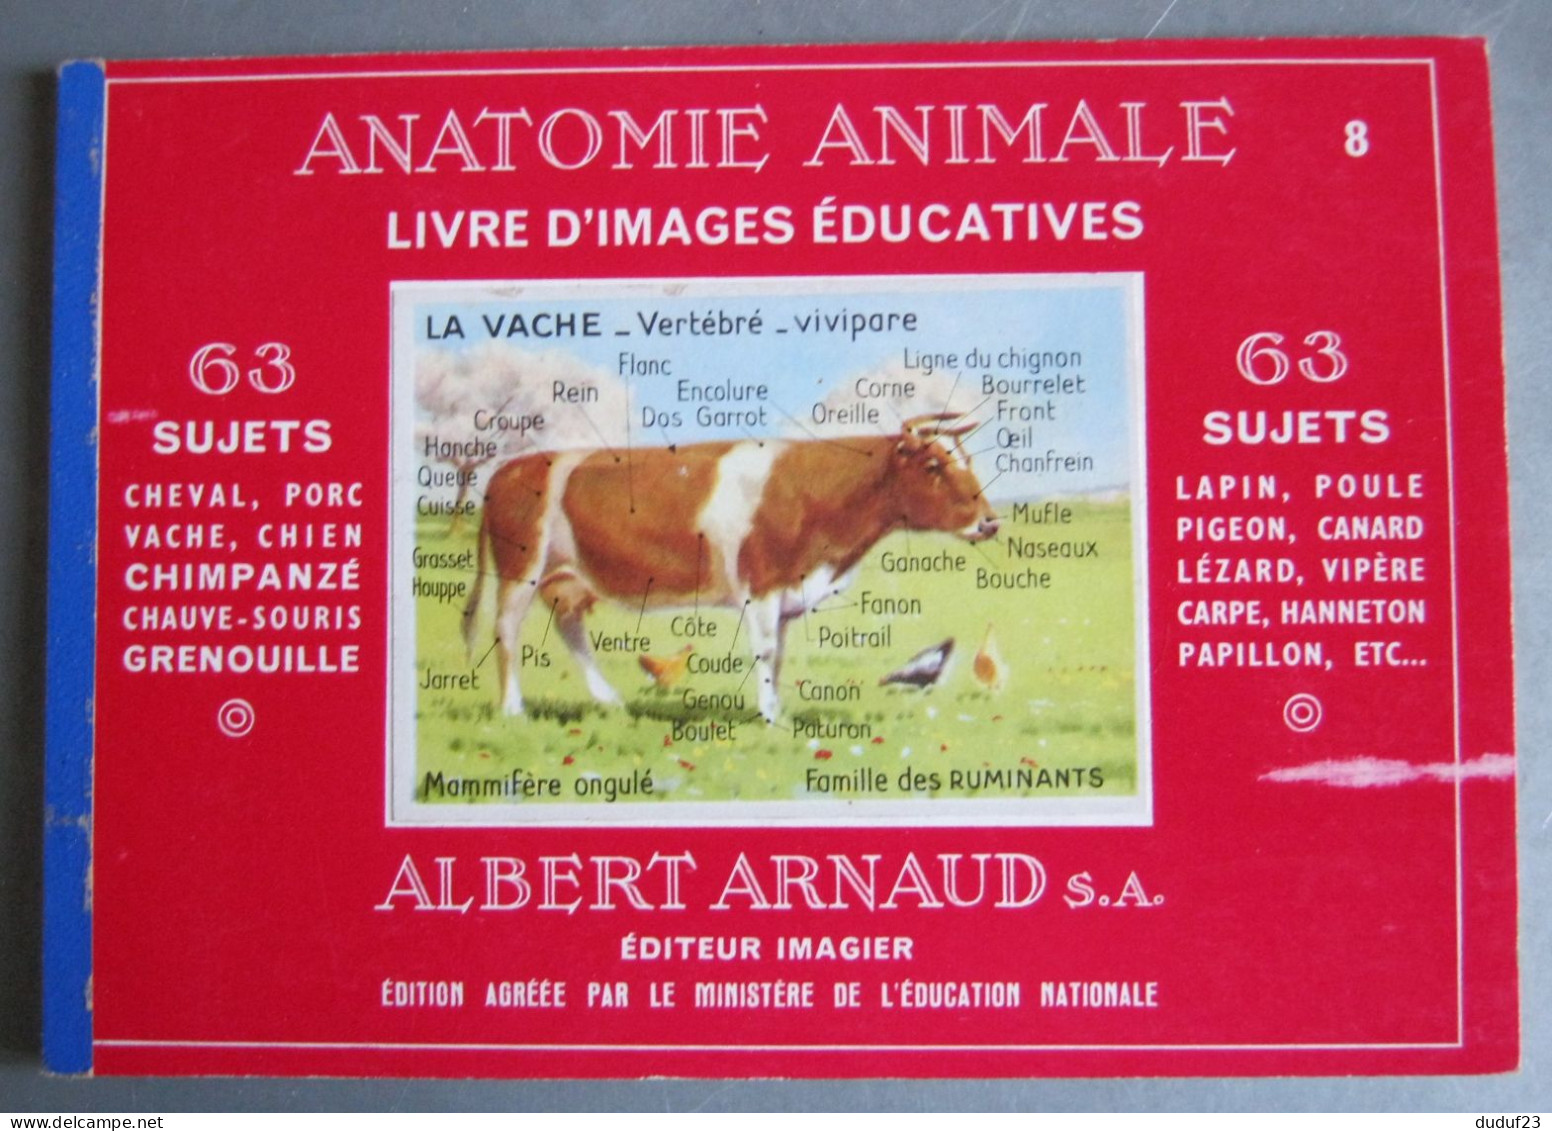 LIVRE D'IMAGES EDUCATIVES N°8 ANATOMIE ANIMALE ALBERT ARNAUD 63 SUJETS CIRCA 1960 - Chromos